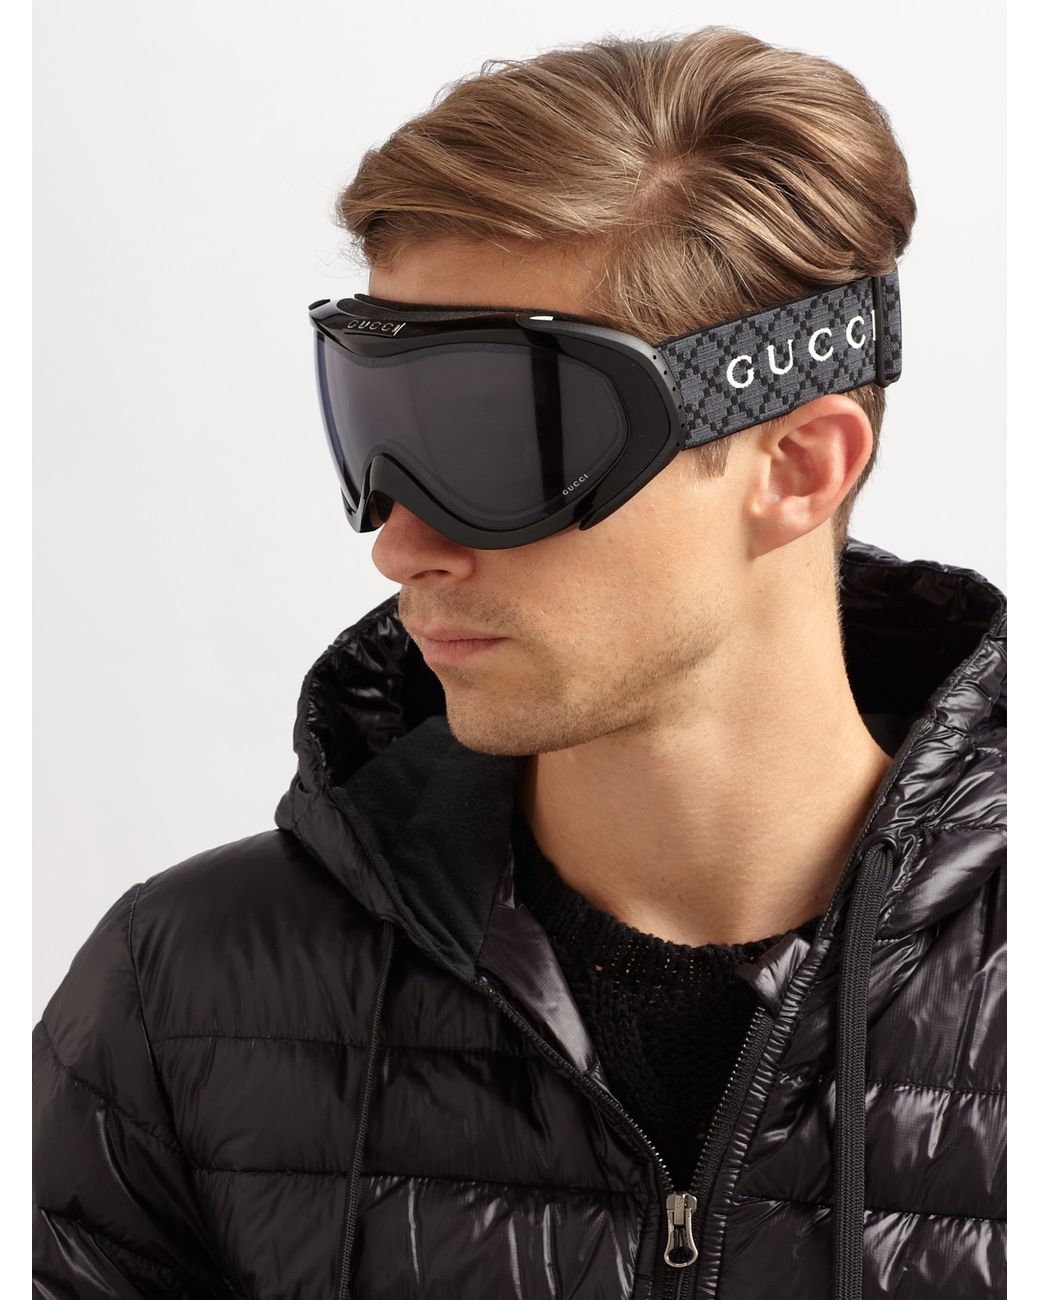 Gucci ski goggles in black injected